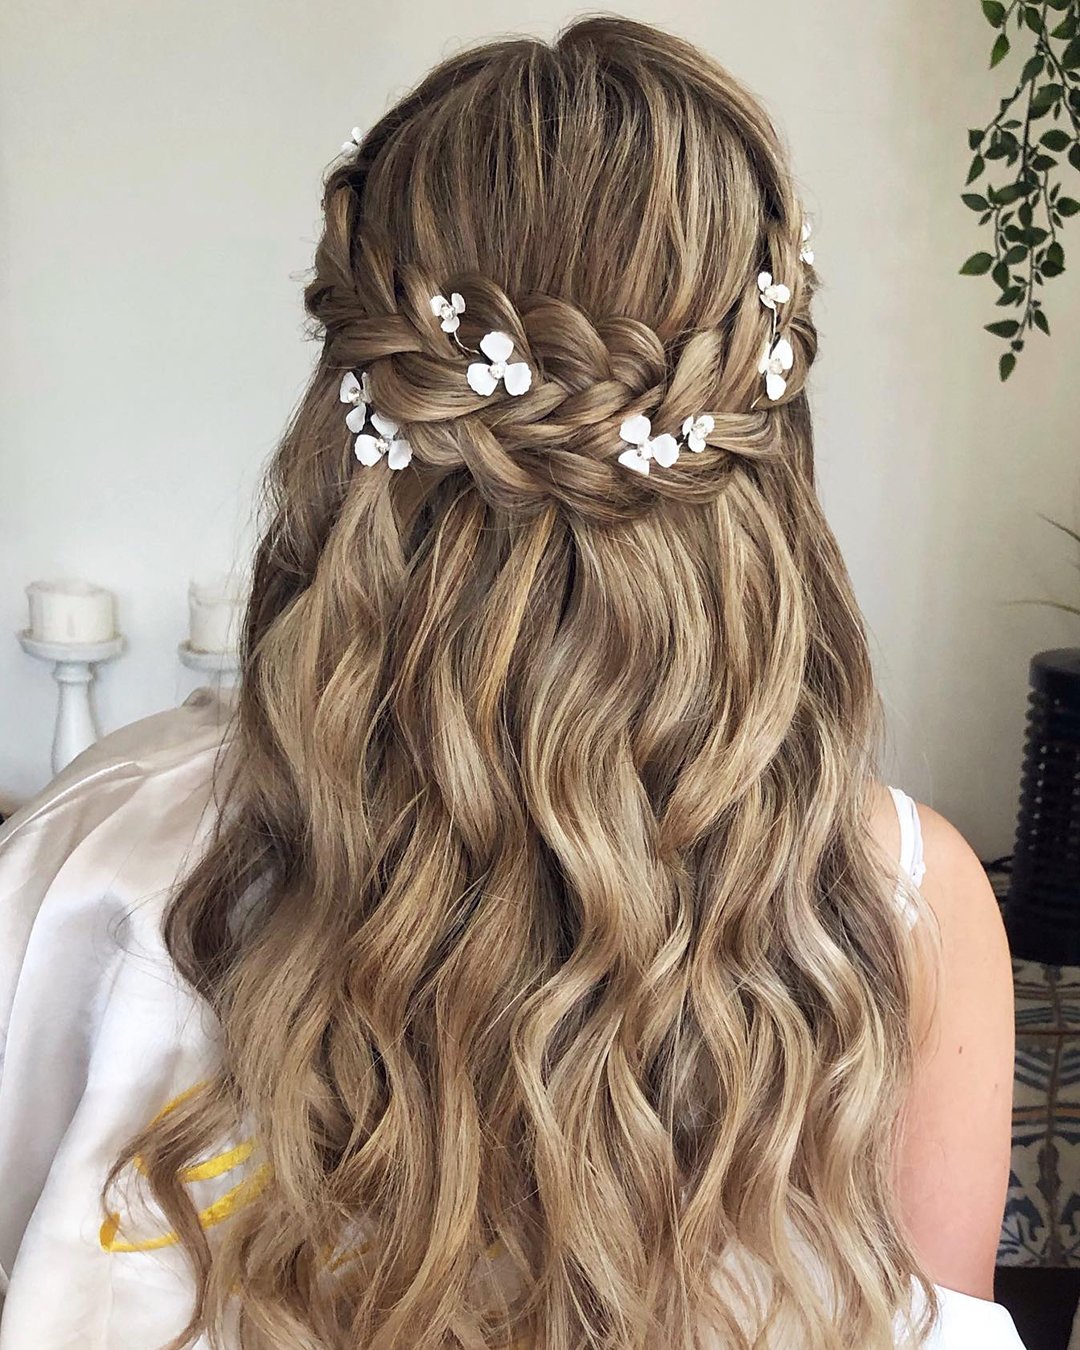 braided wedding hair half up with braids and white flower pins zhanna_syniavska